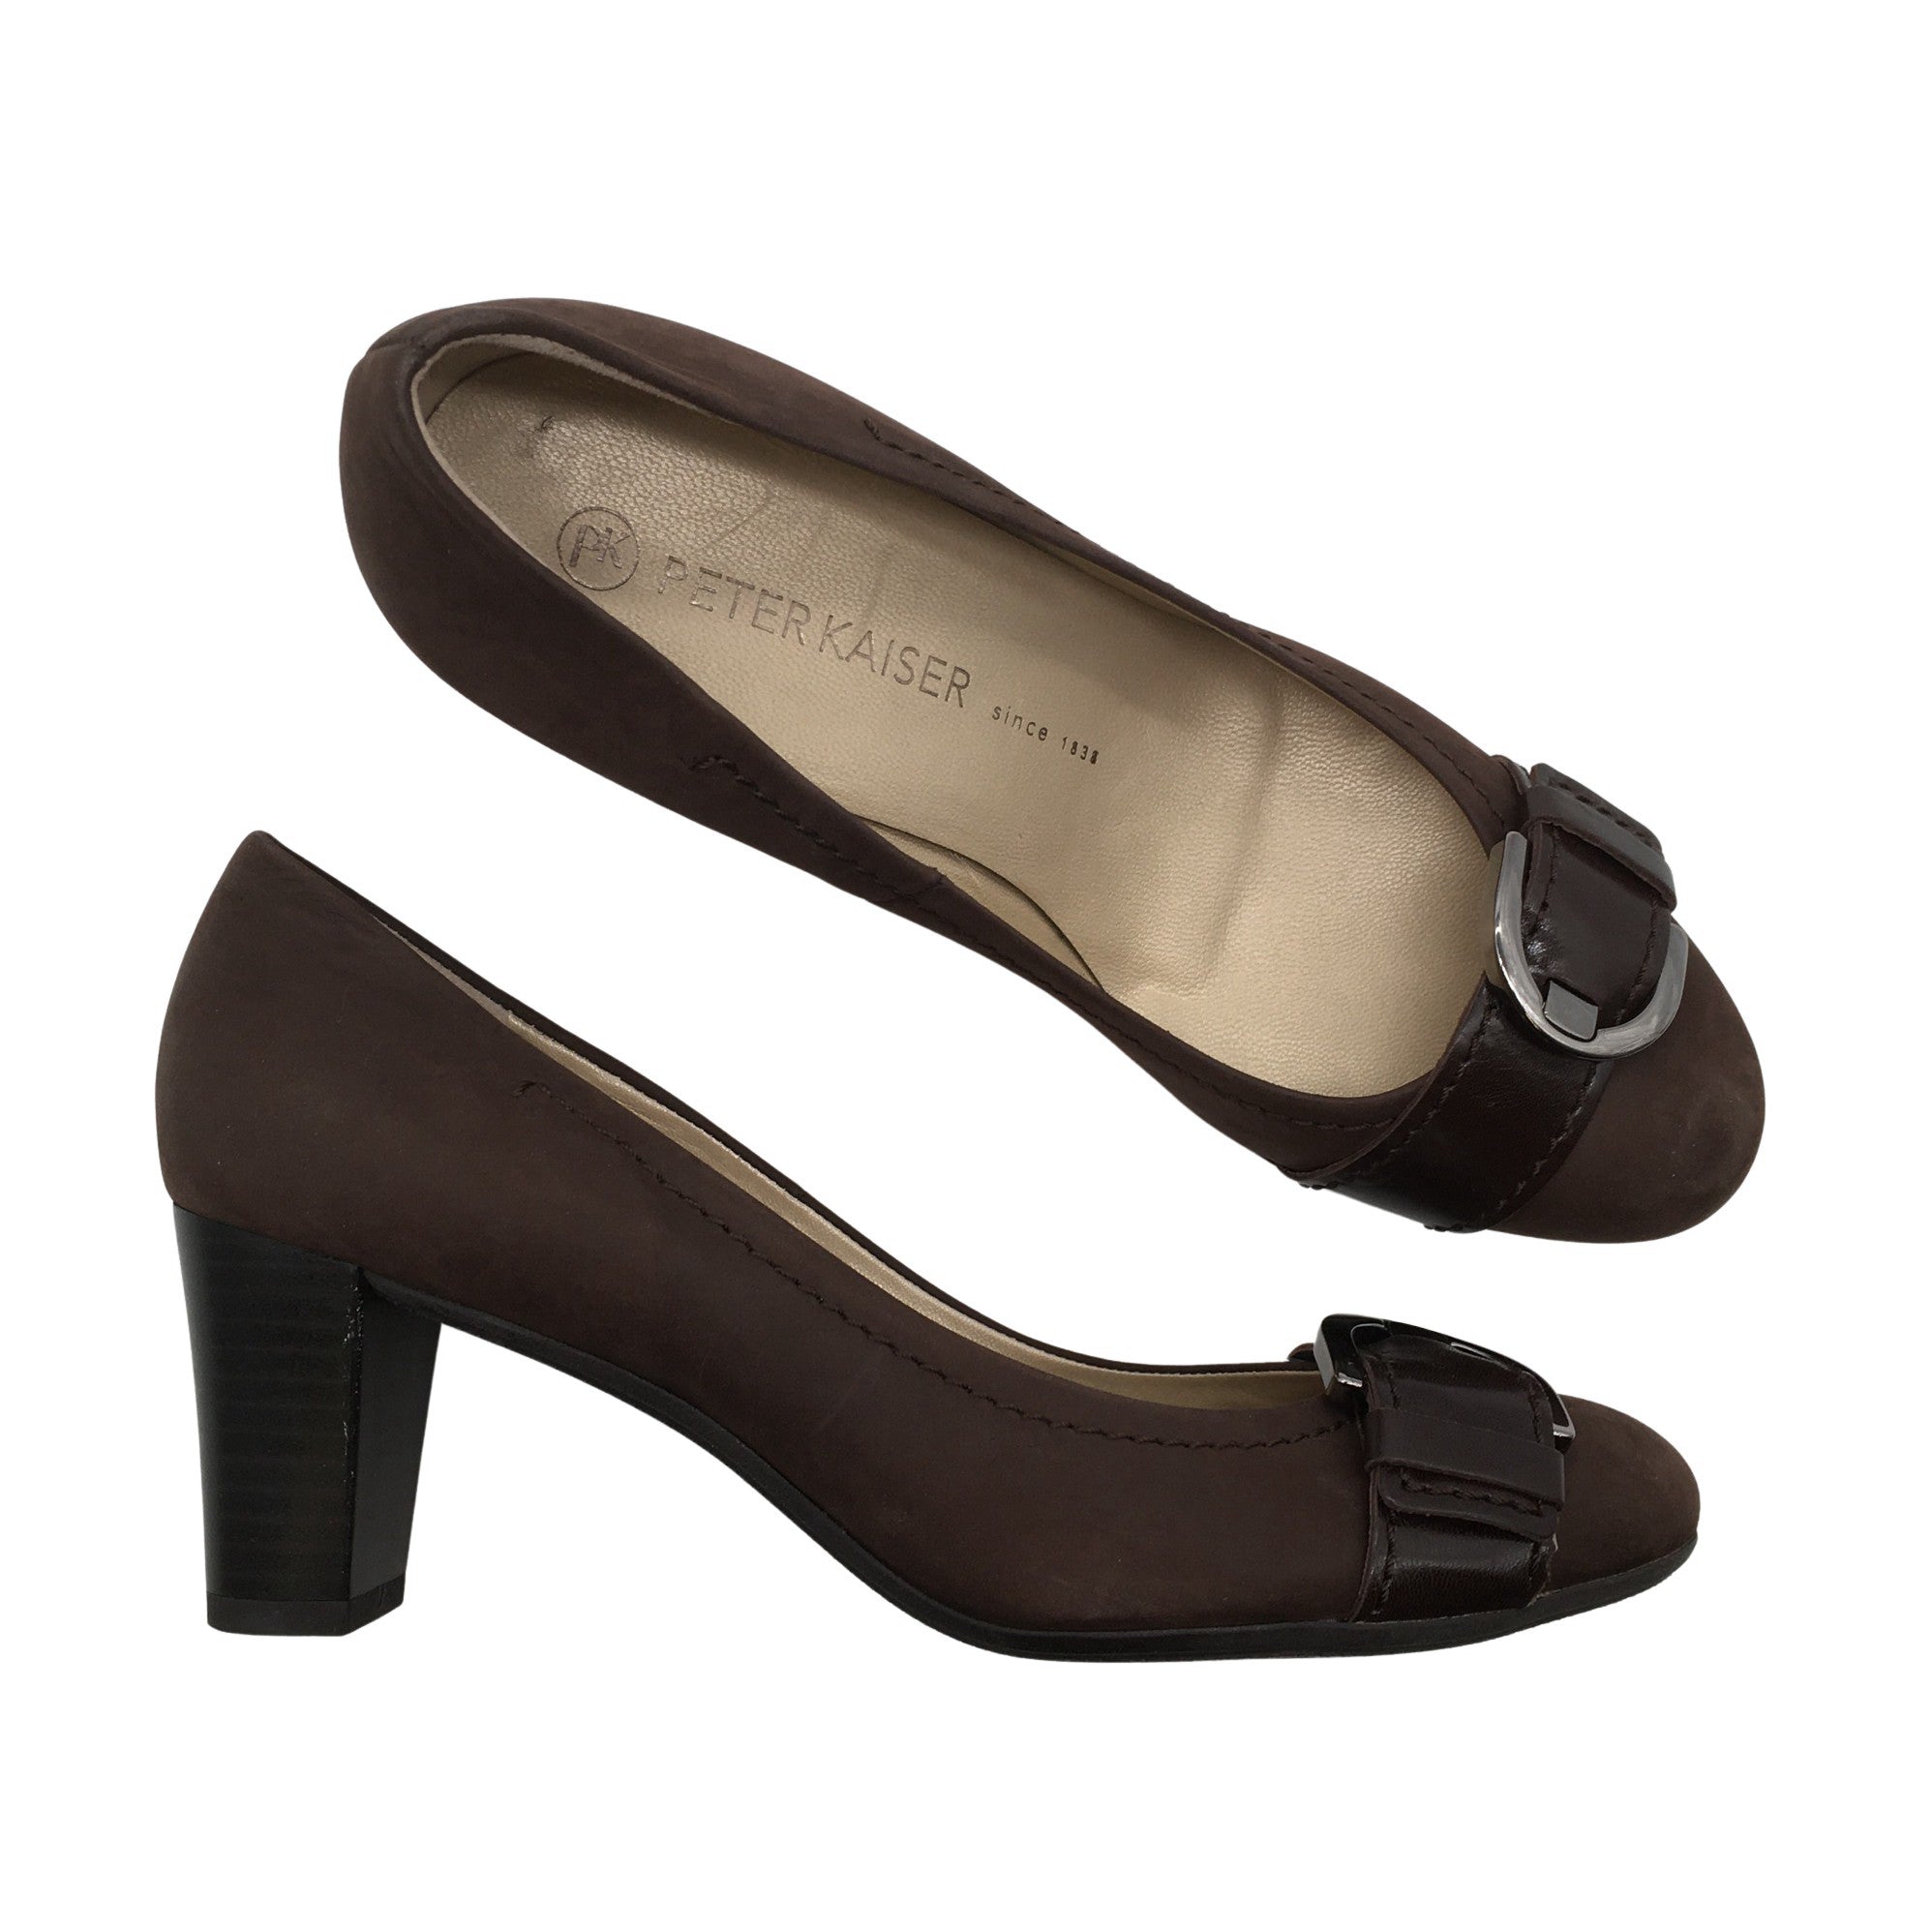 Women's Peter High heels, size 38 (Brown) | Emmy